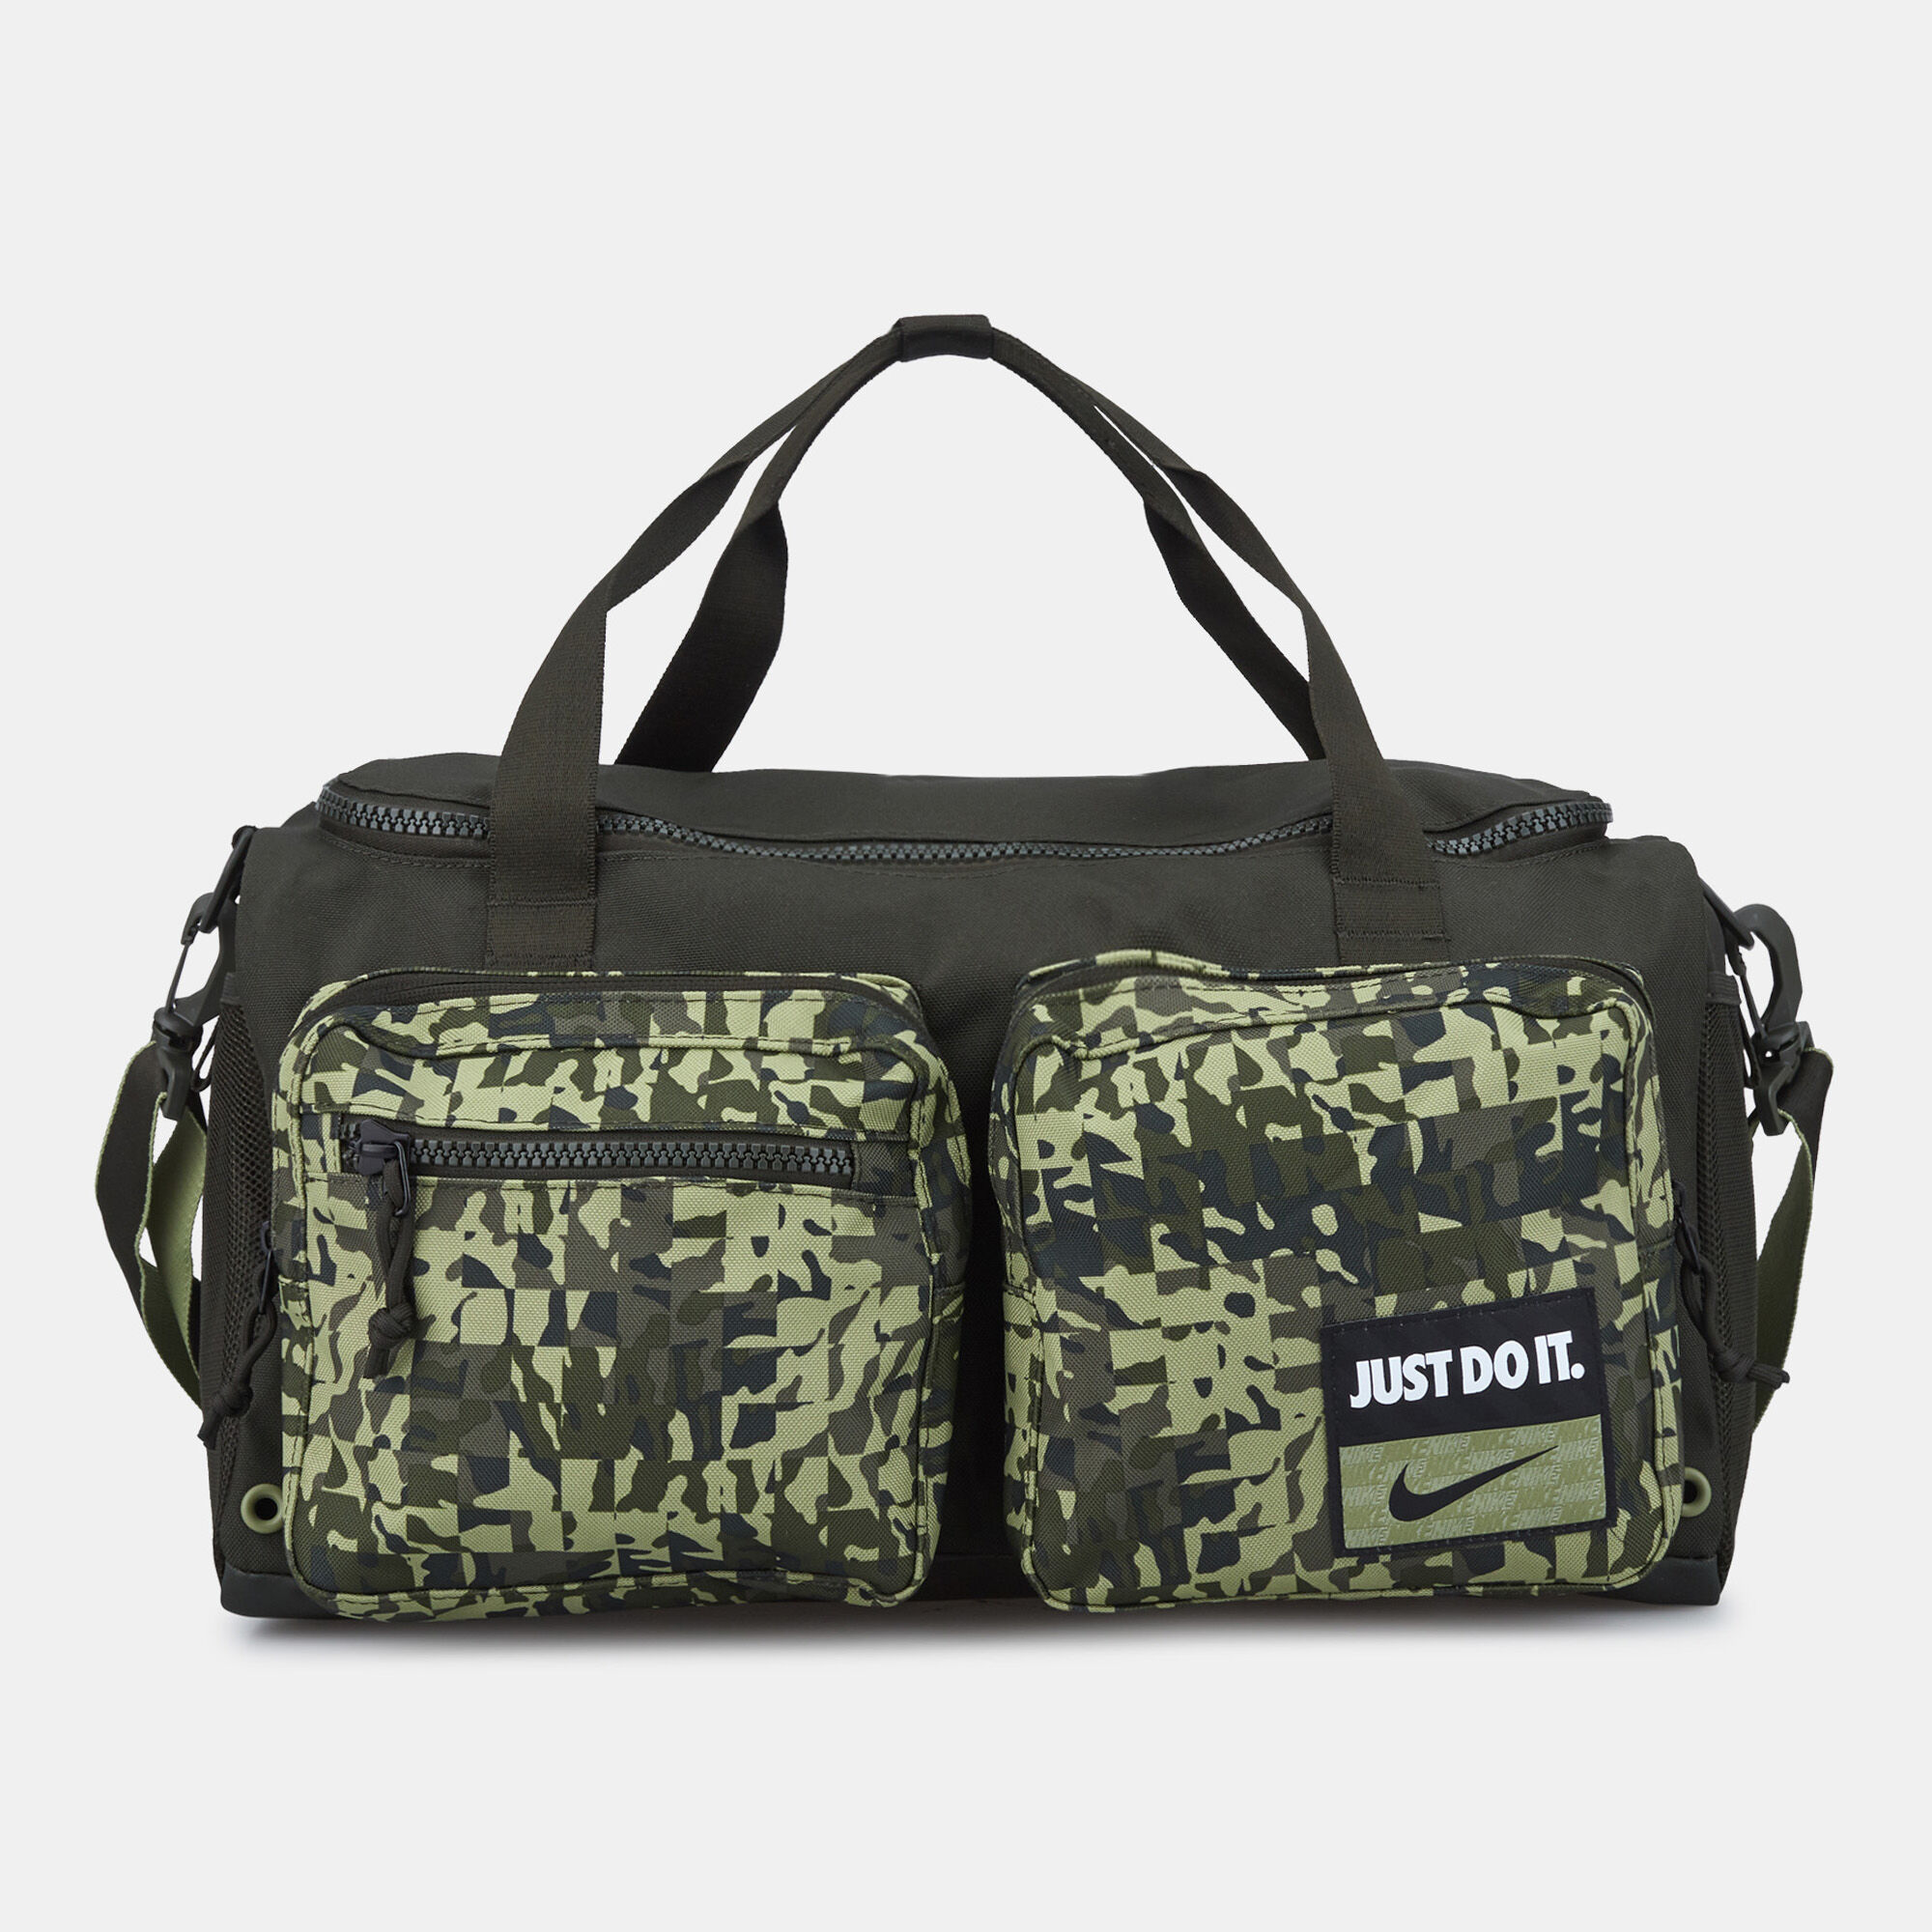 Buy Grey Sports  Utility Bag for Men by GEAR Online  Ajiocom